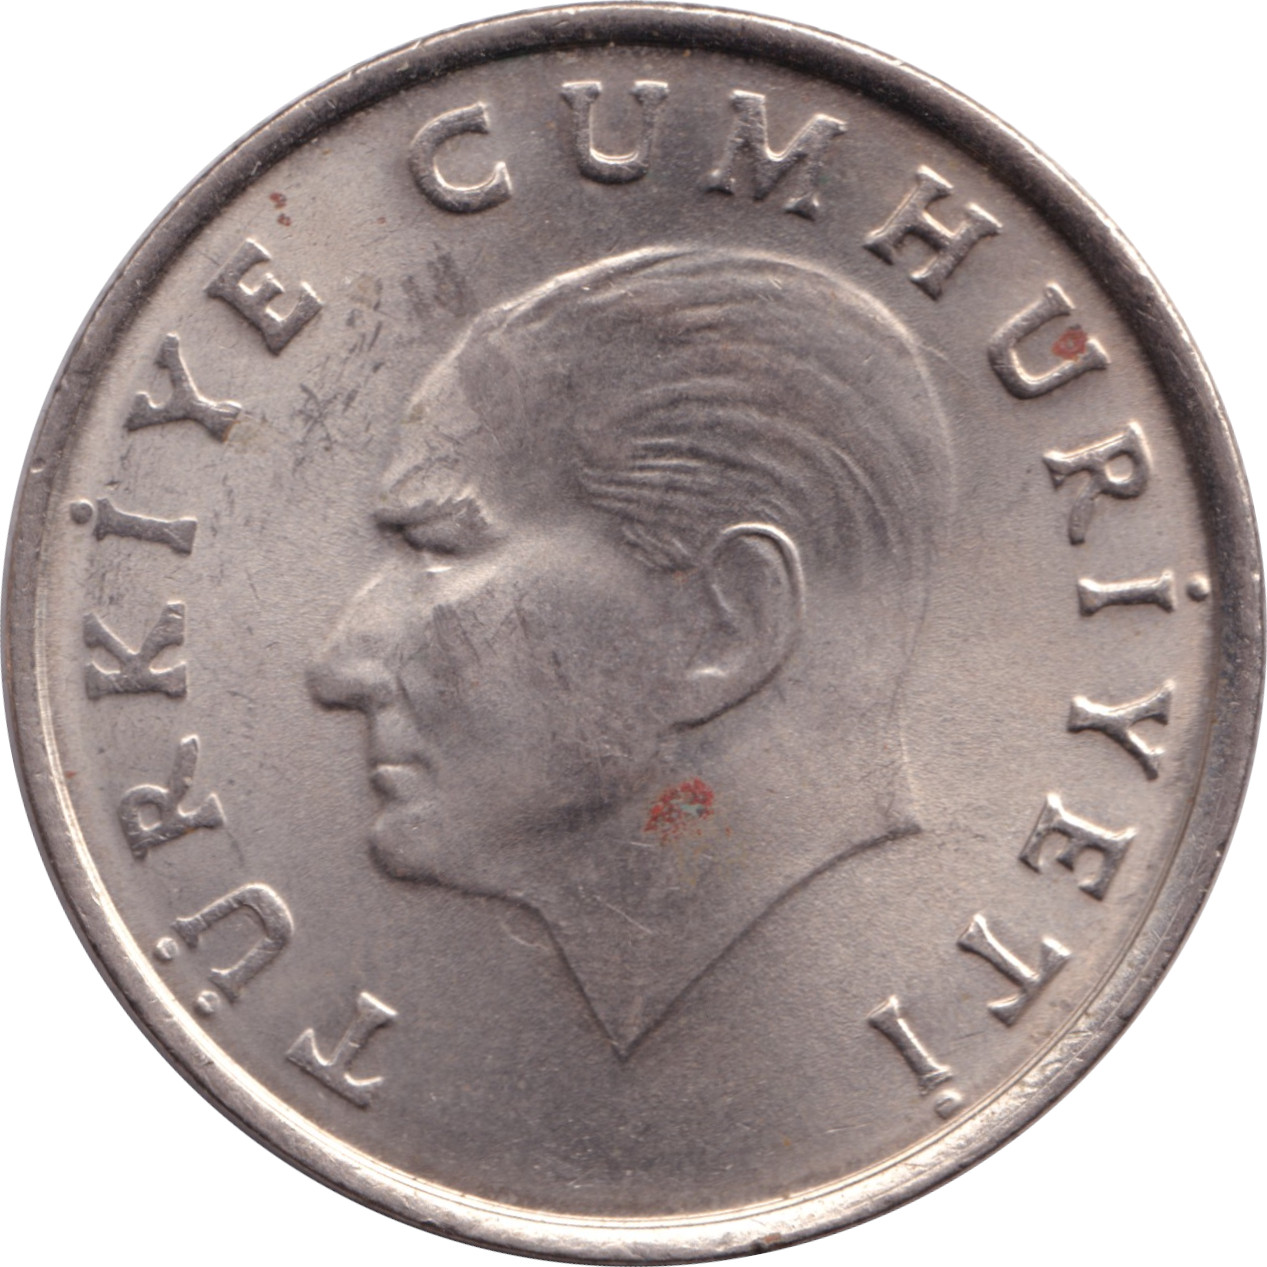 50 lira - Moustafa Kemal • Type 1